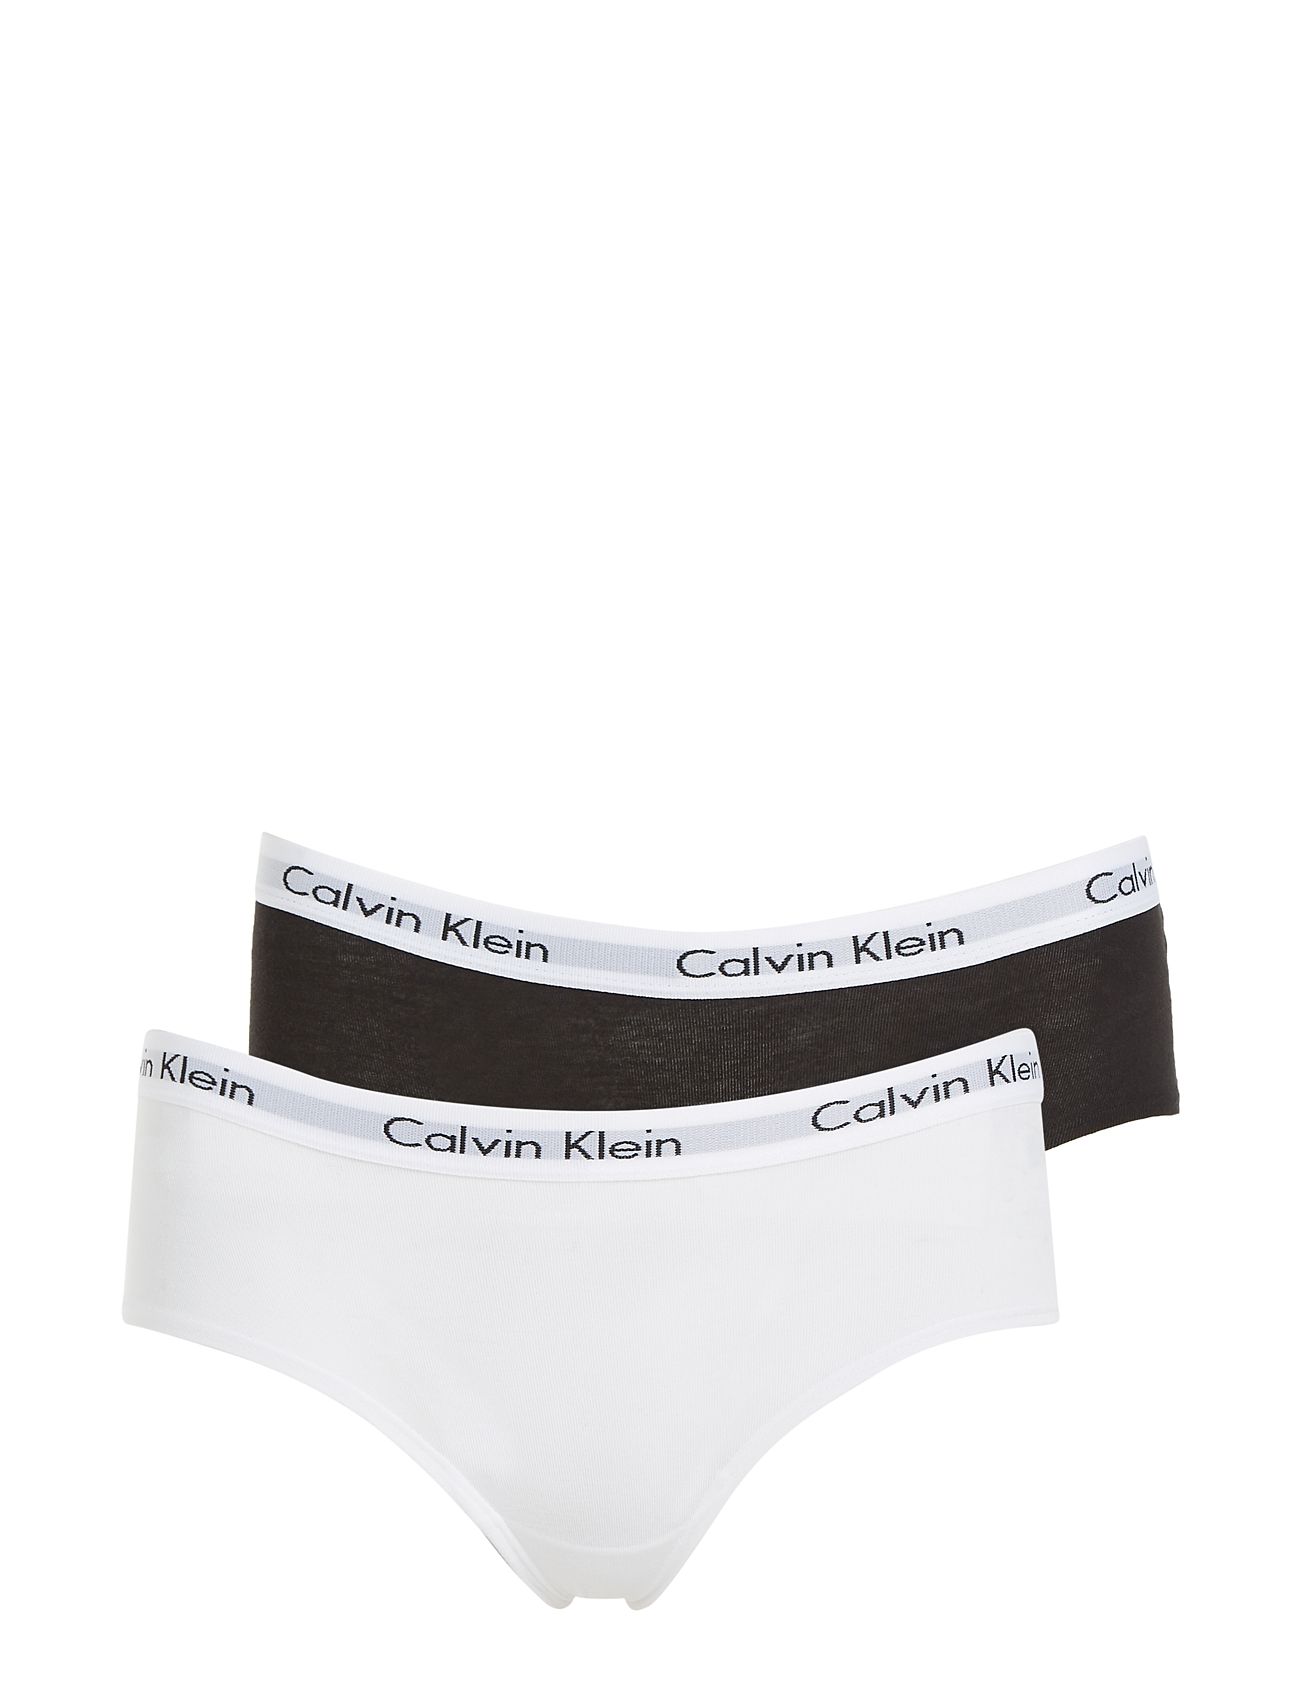 Hvid Calvin Klein 2pk Shorty underbukser børn - Pashion.dk